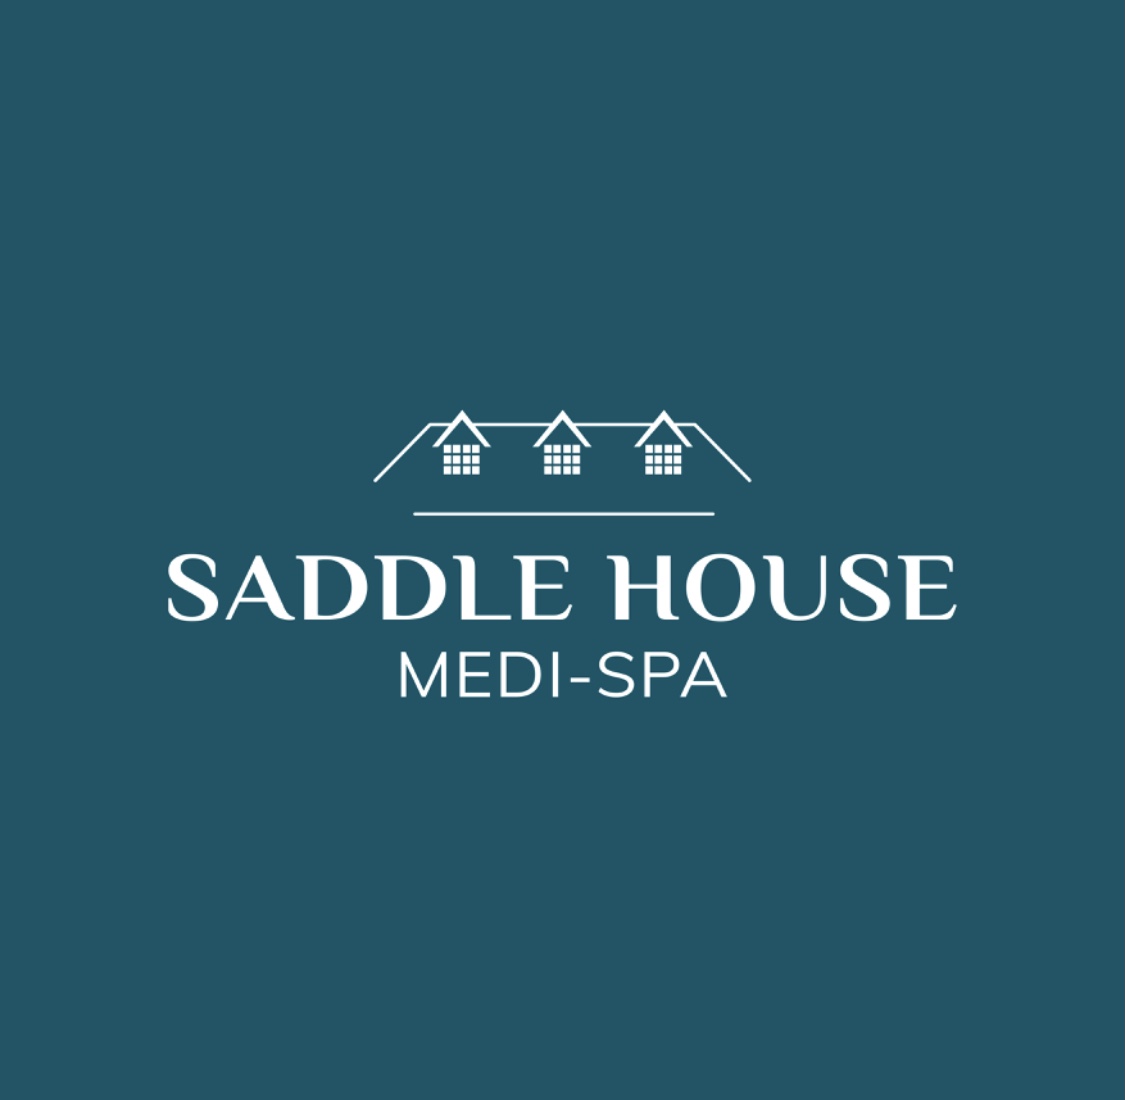 Saddle House Medi-Spa